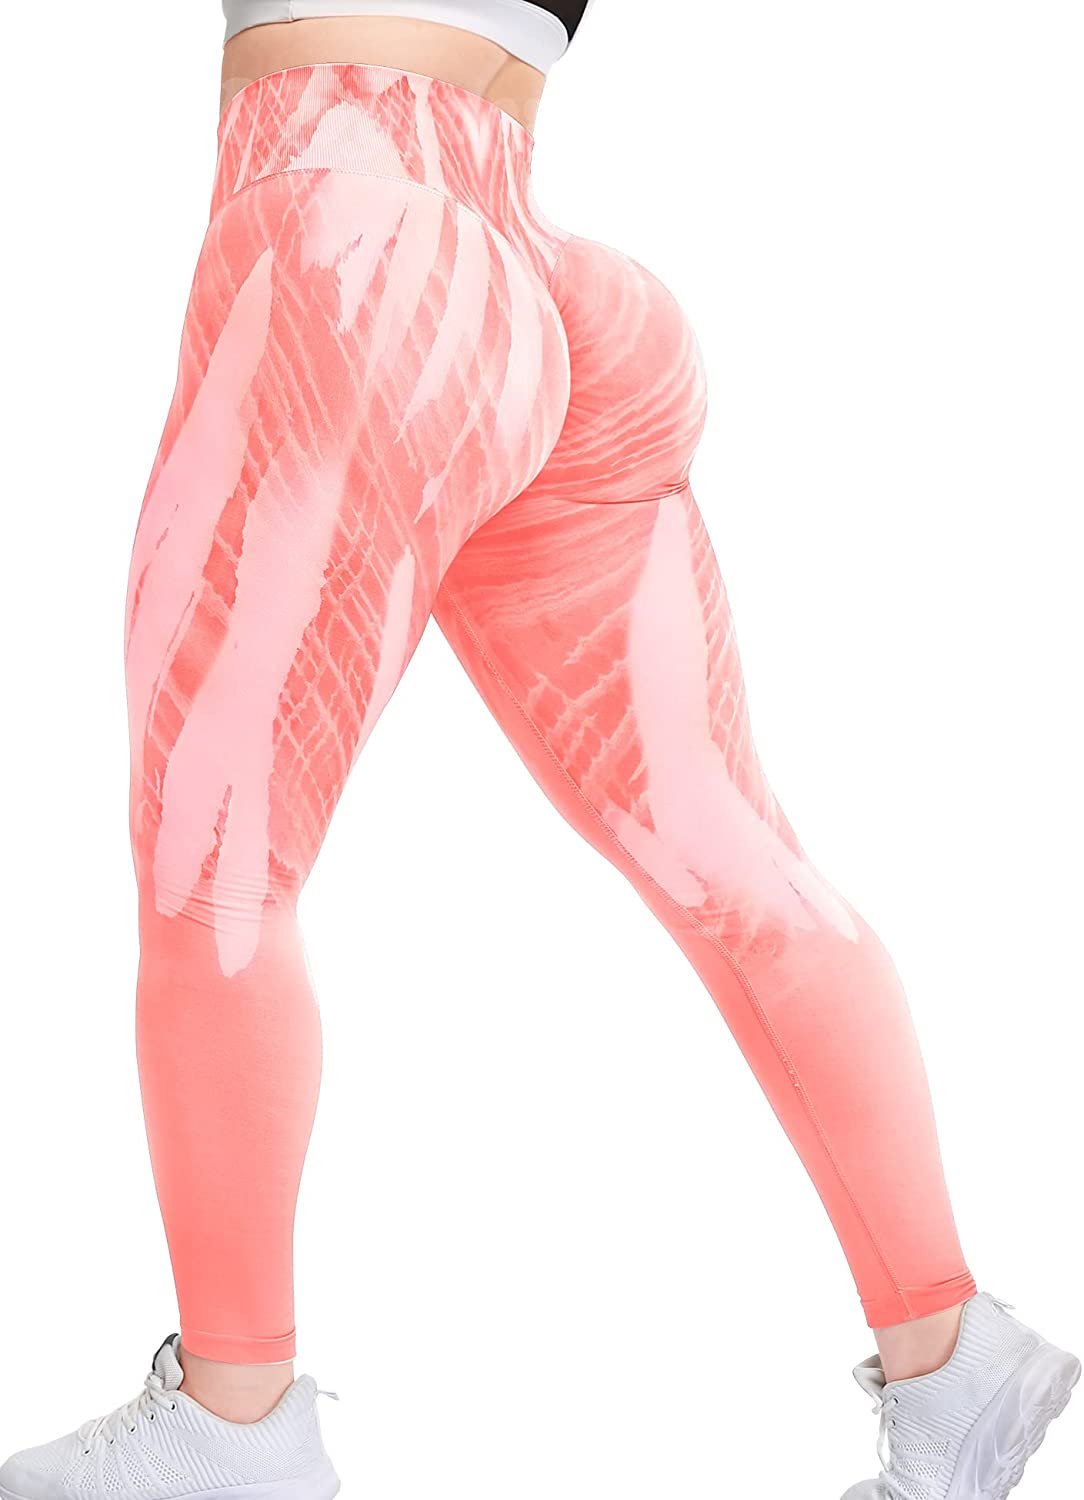 VOYJOY Tie Dye Seamless Leggings for Women High Waist Yoga Pants, Scrunch  Butt Lifting Elastic Tights (#1 Yellow, Small), #1 Yellow, S price in UAE,  UAE